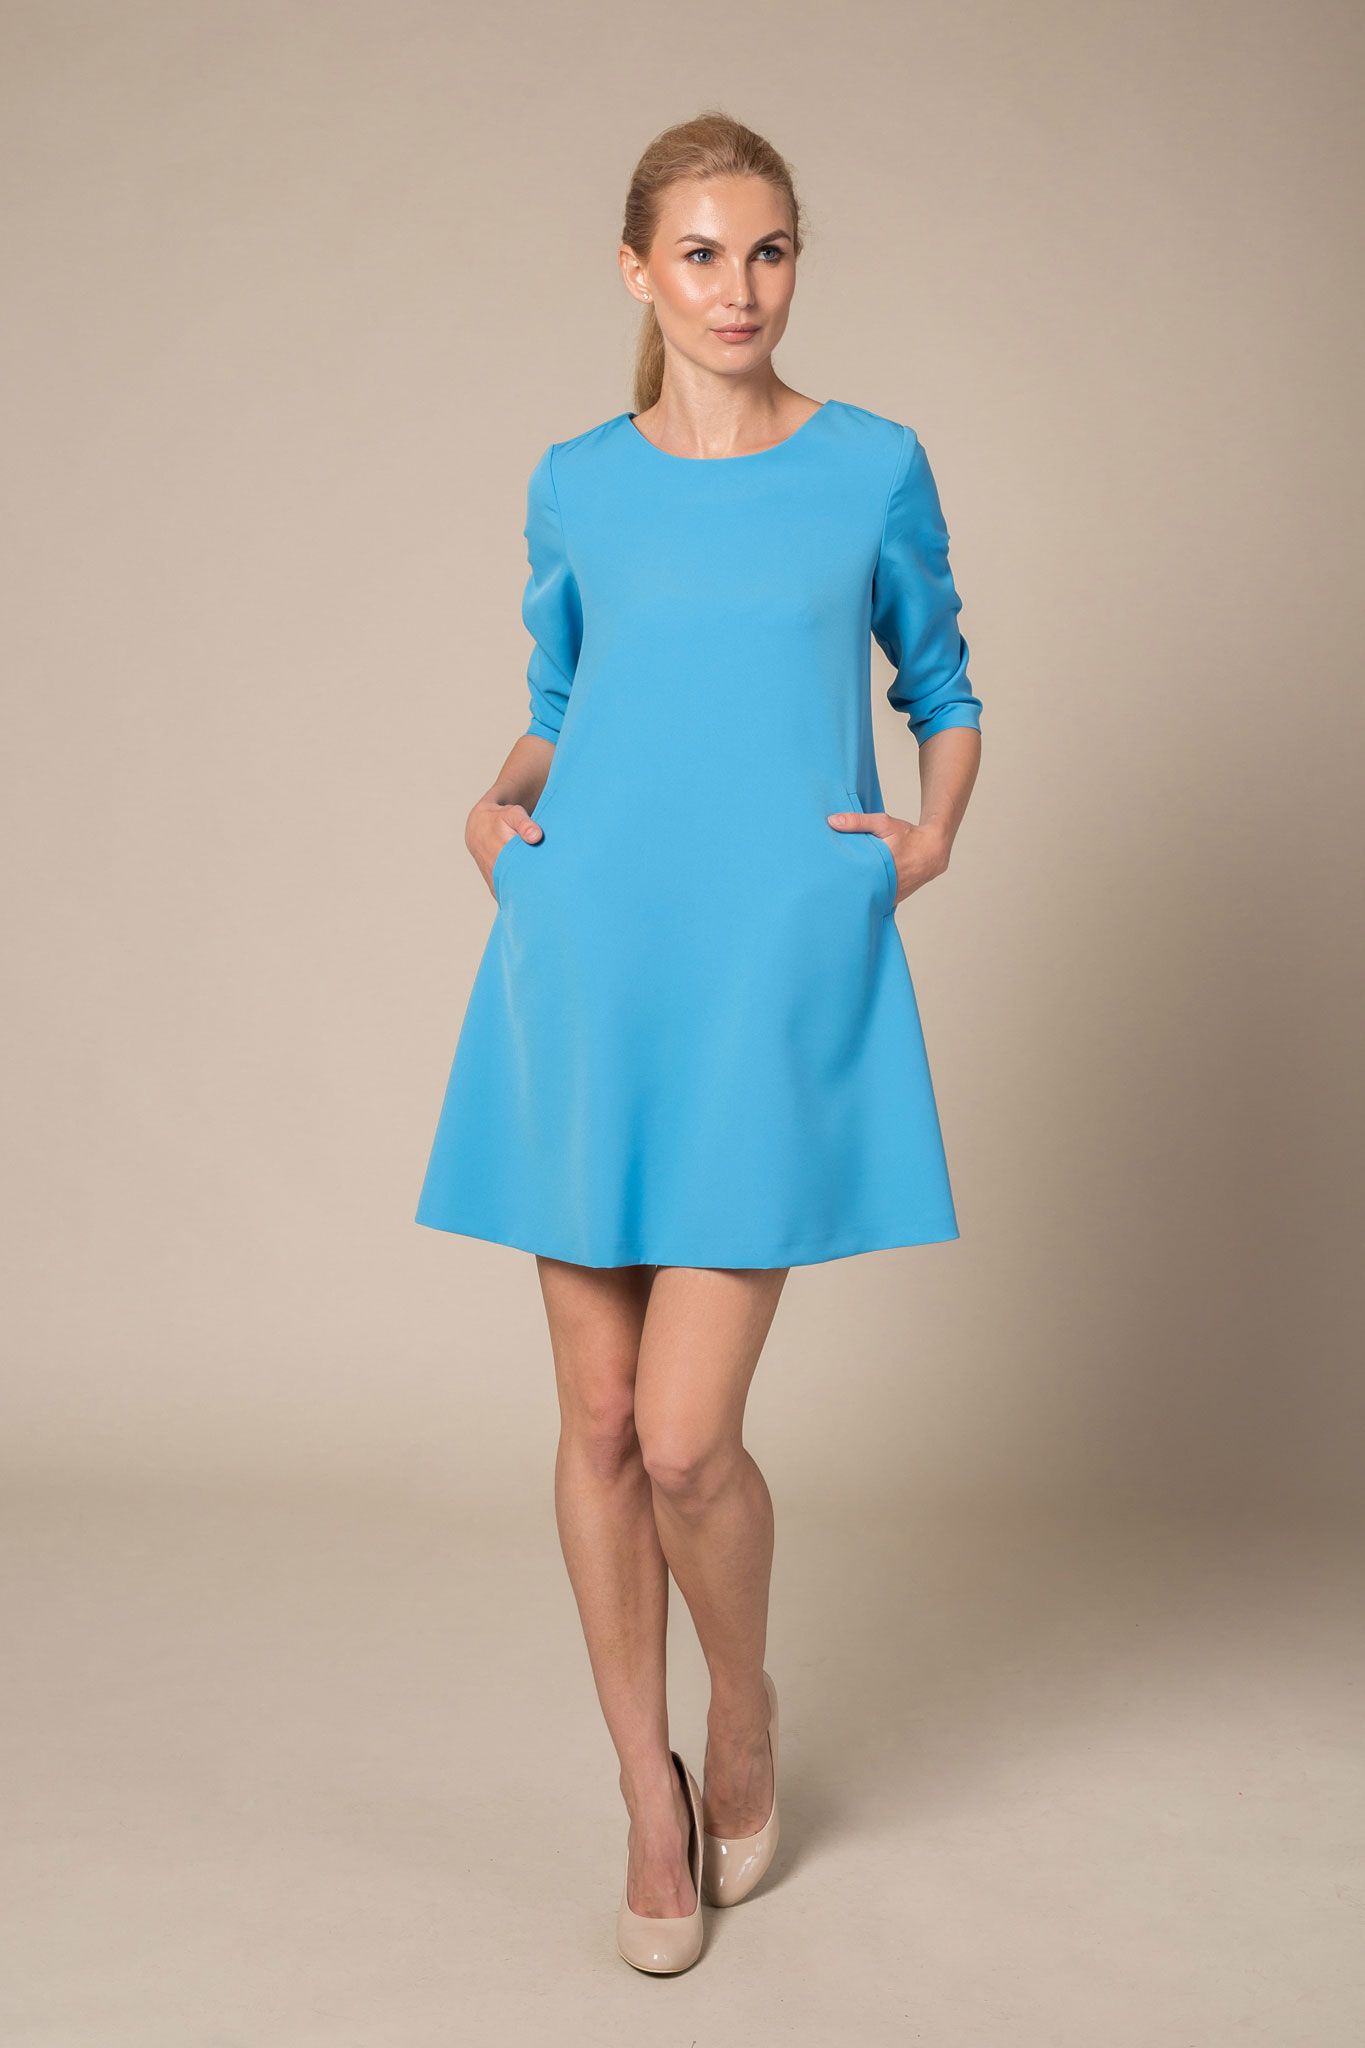 Blue casual scoop neck dress with pockets - Le Parole